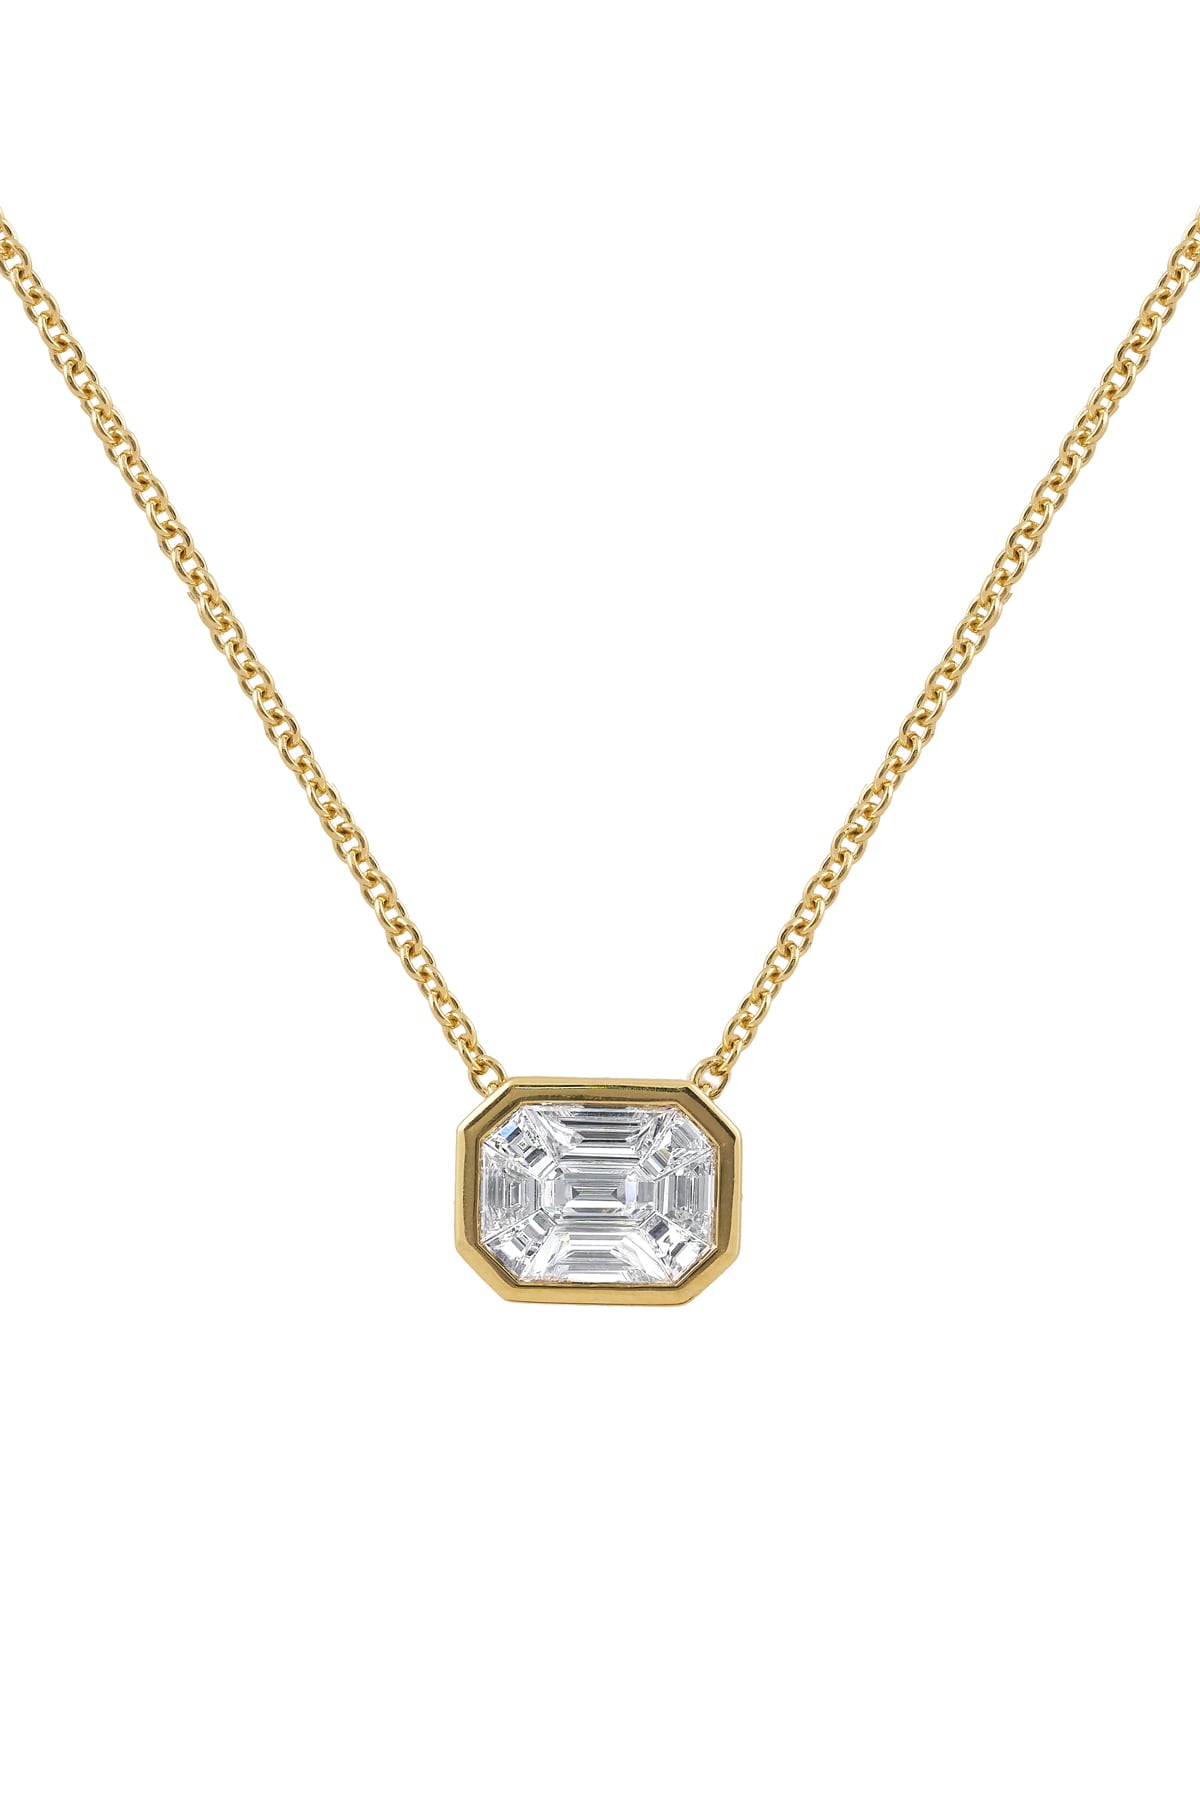 18ct Yellow Gold Magic Emerald Cut Diamond Set Slider Pendant with Chain from LeGassick Jewellery Gold Coast, Australia.